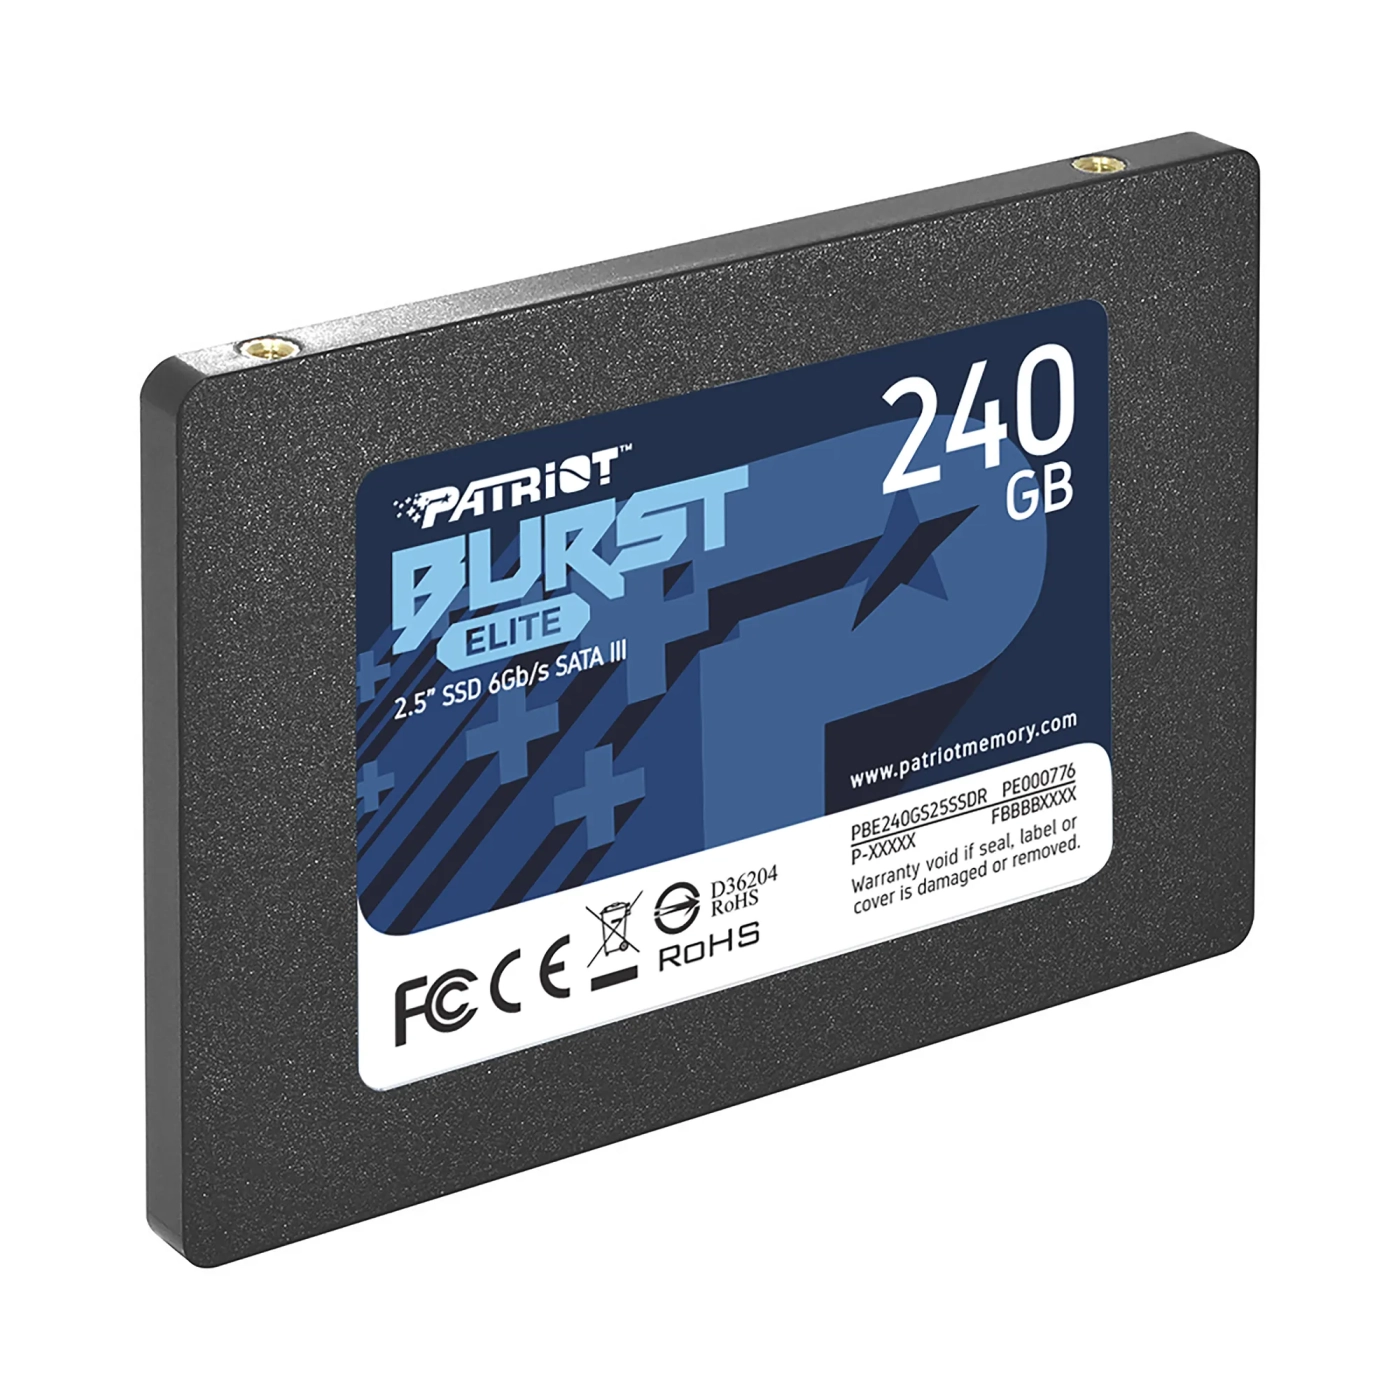 Купить SSD PATRIOT Burst Elite 240GB 2.5" SATA III - фото 3